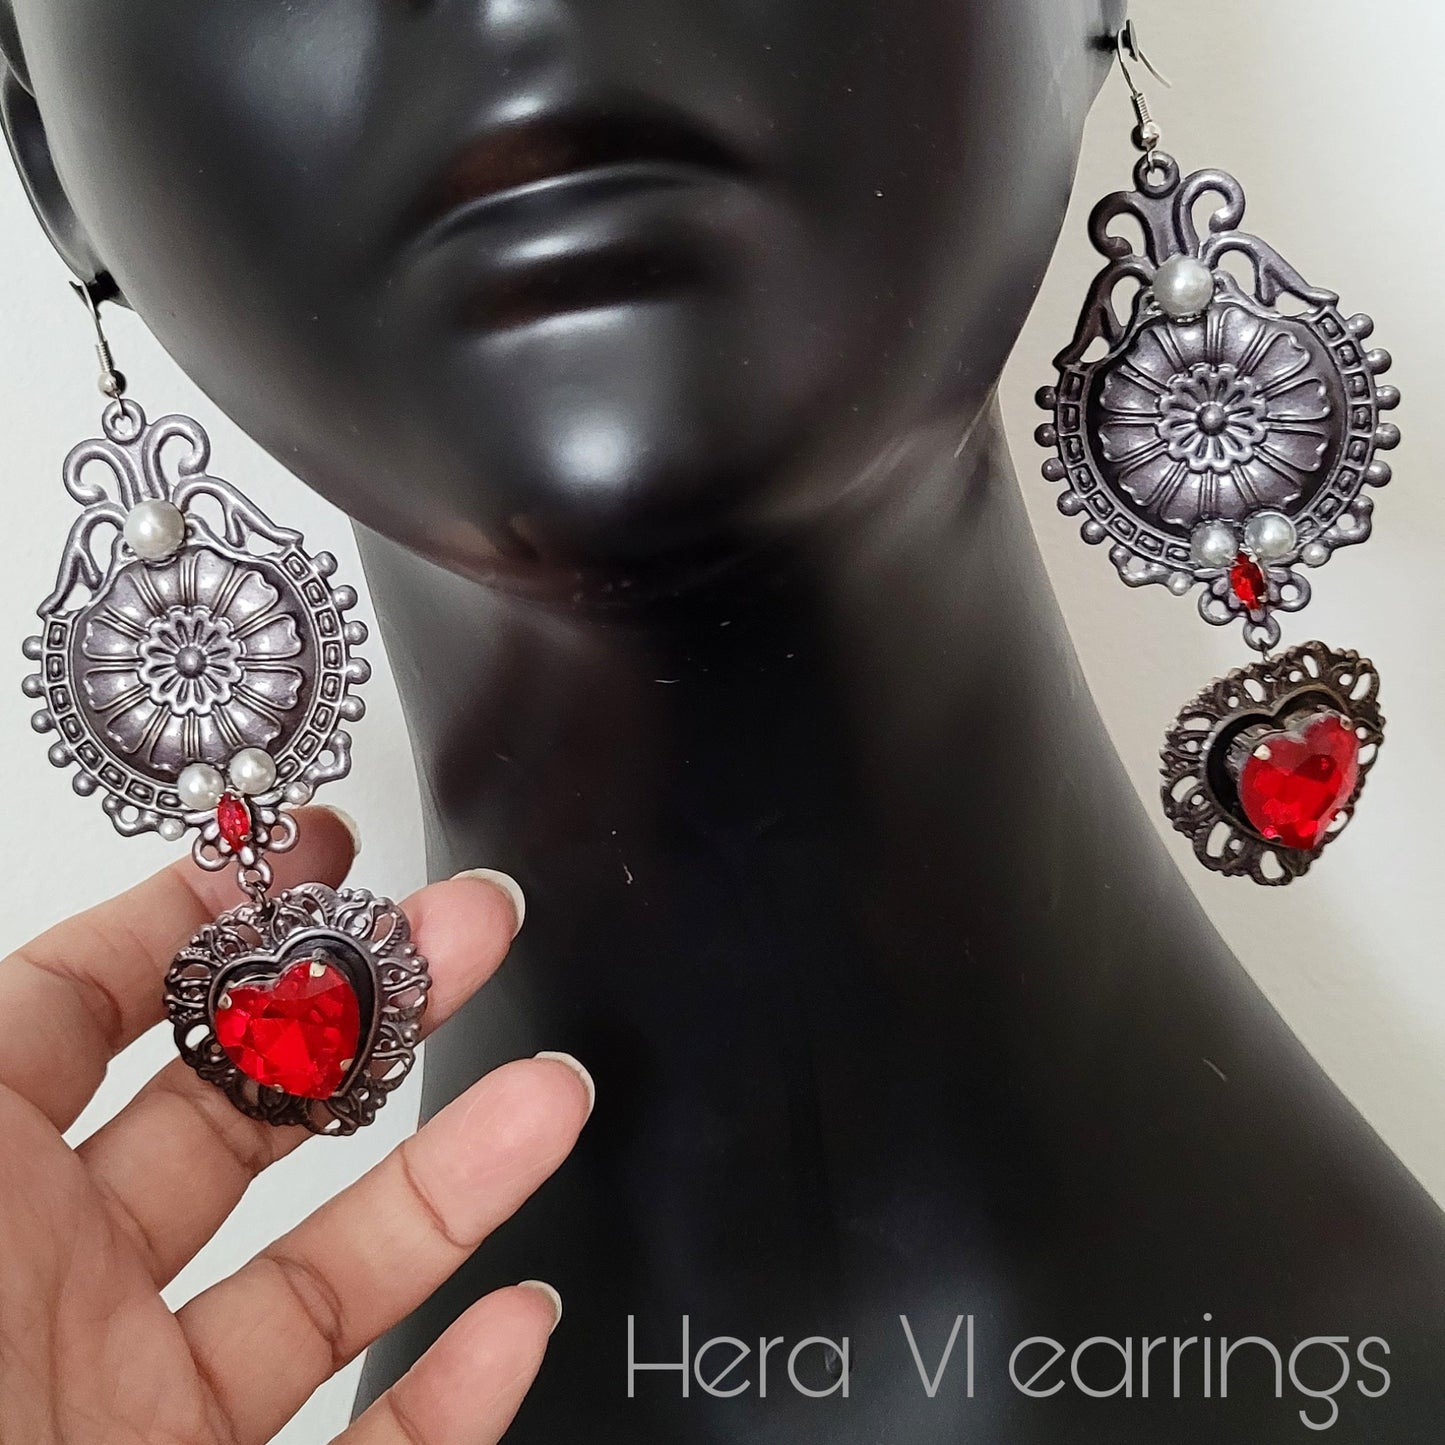 Deusa ex Machina collection: The Hera earrings